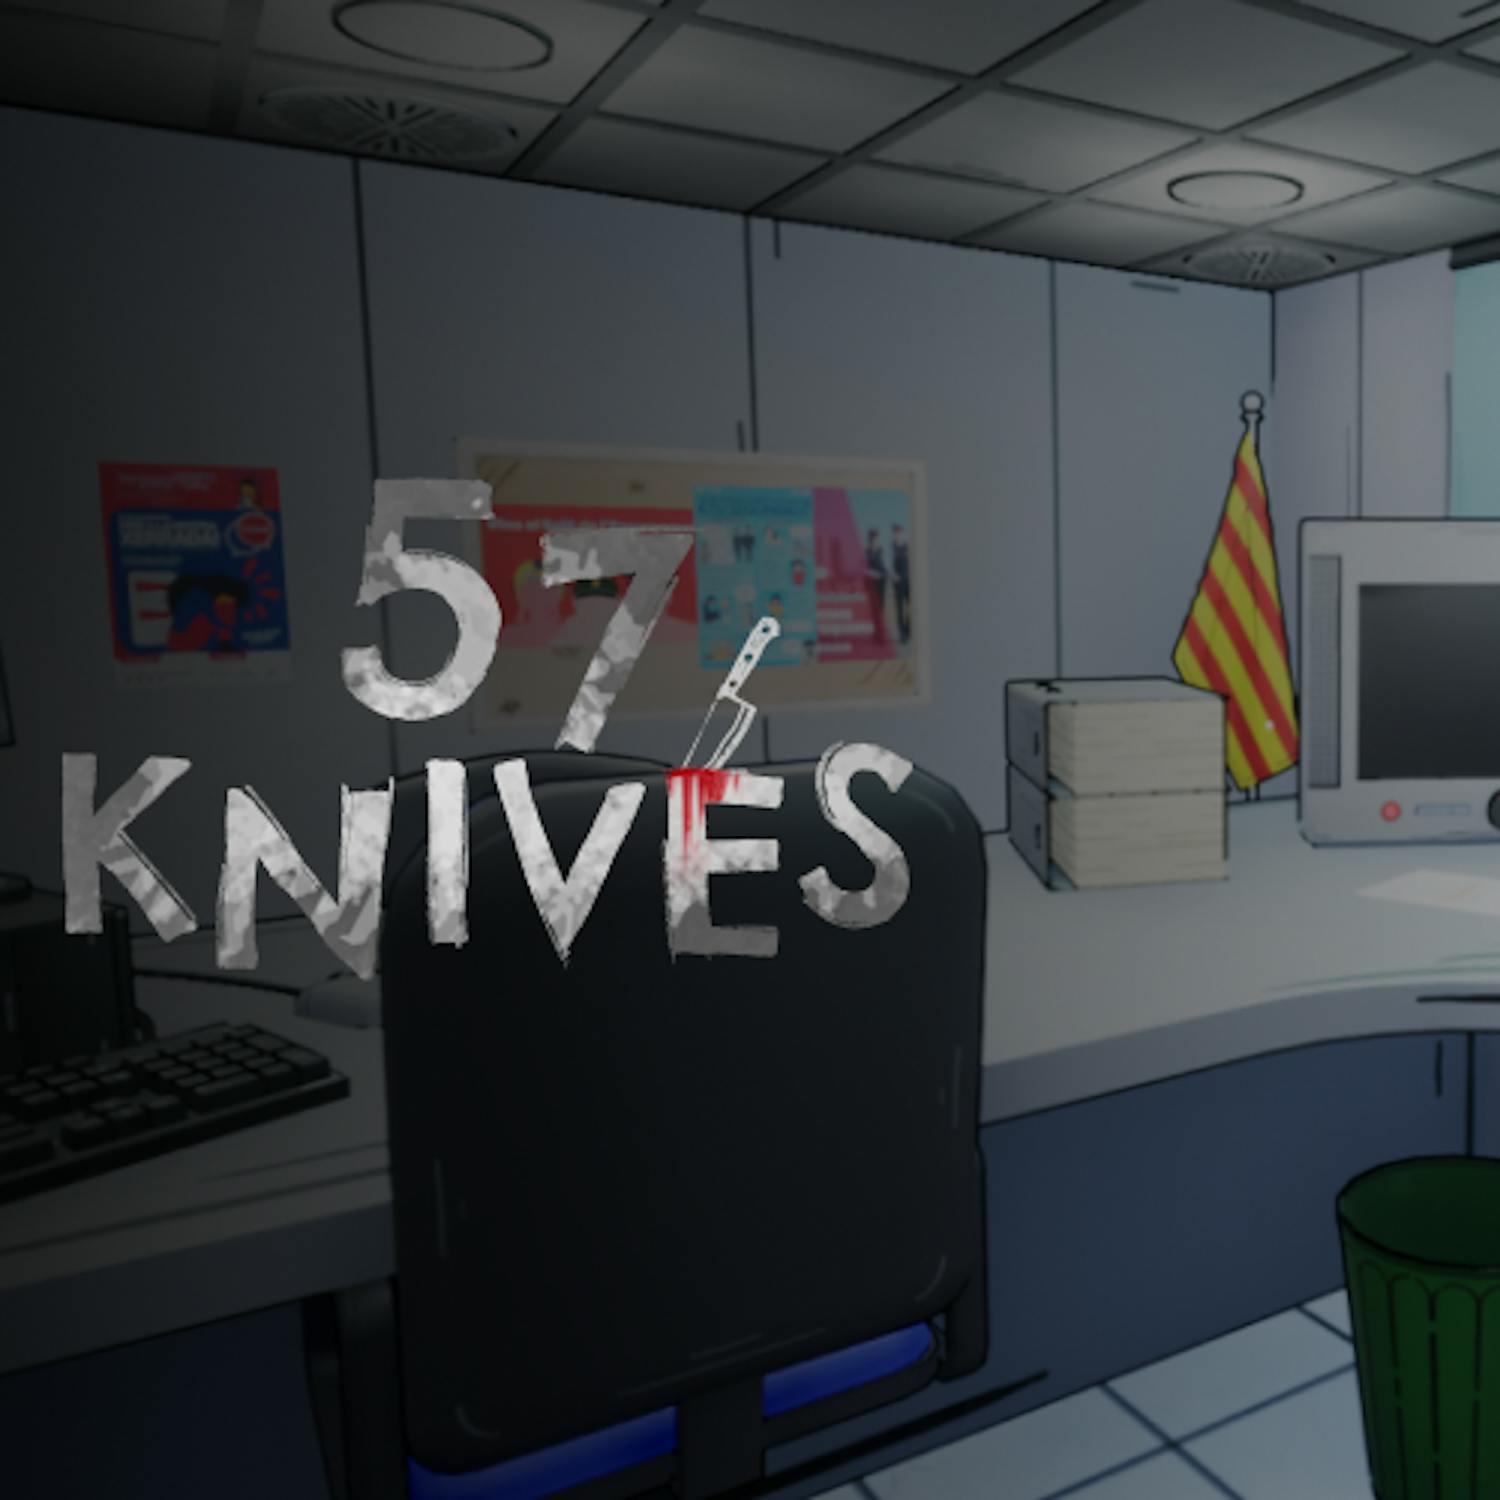 57 Knives